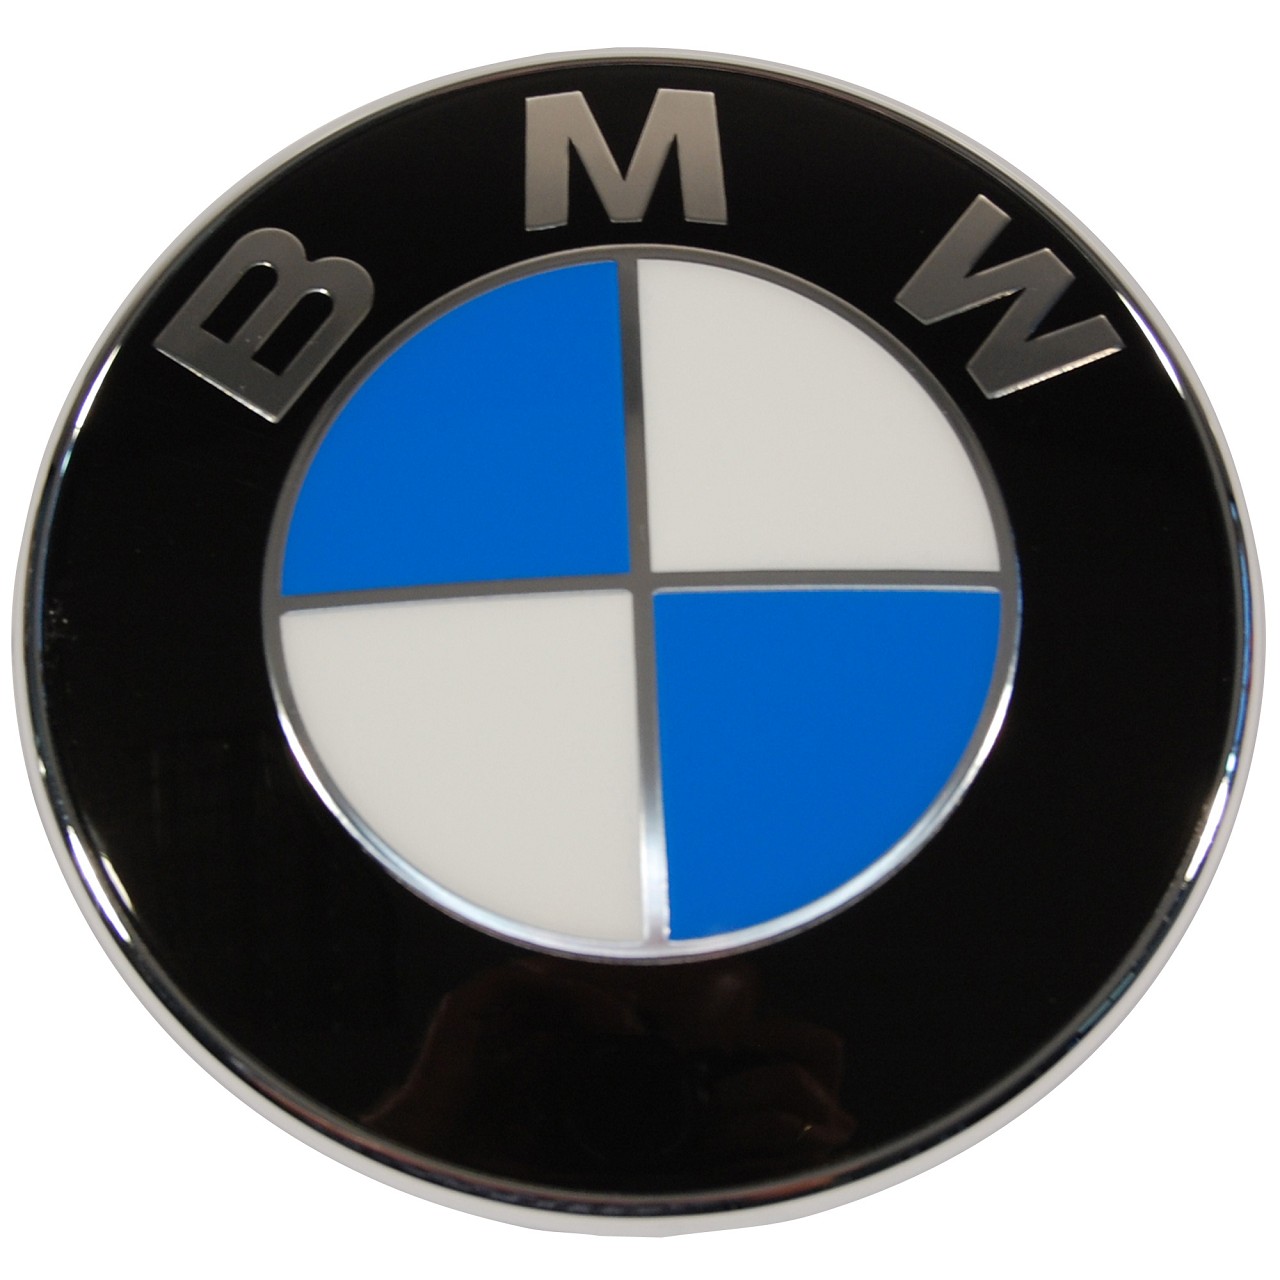 Original BMW Embleme - 51 14 8 132 375